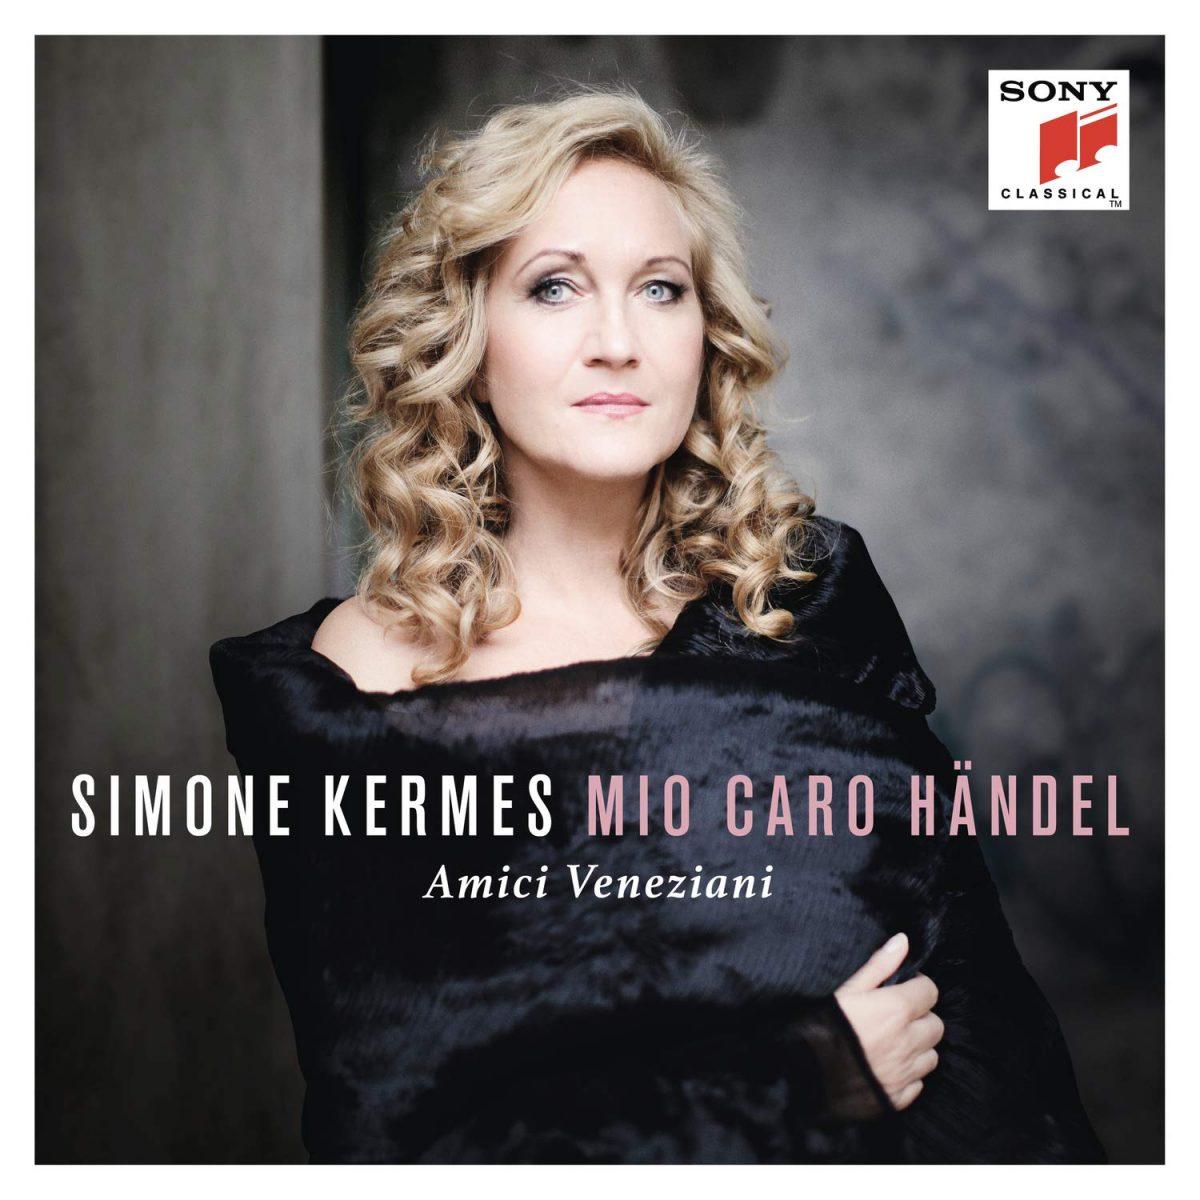 The album cover for Simone Kermes’s new album. (Sony Classical)